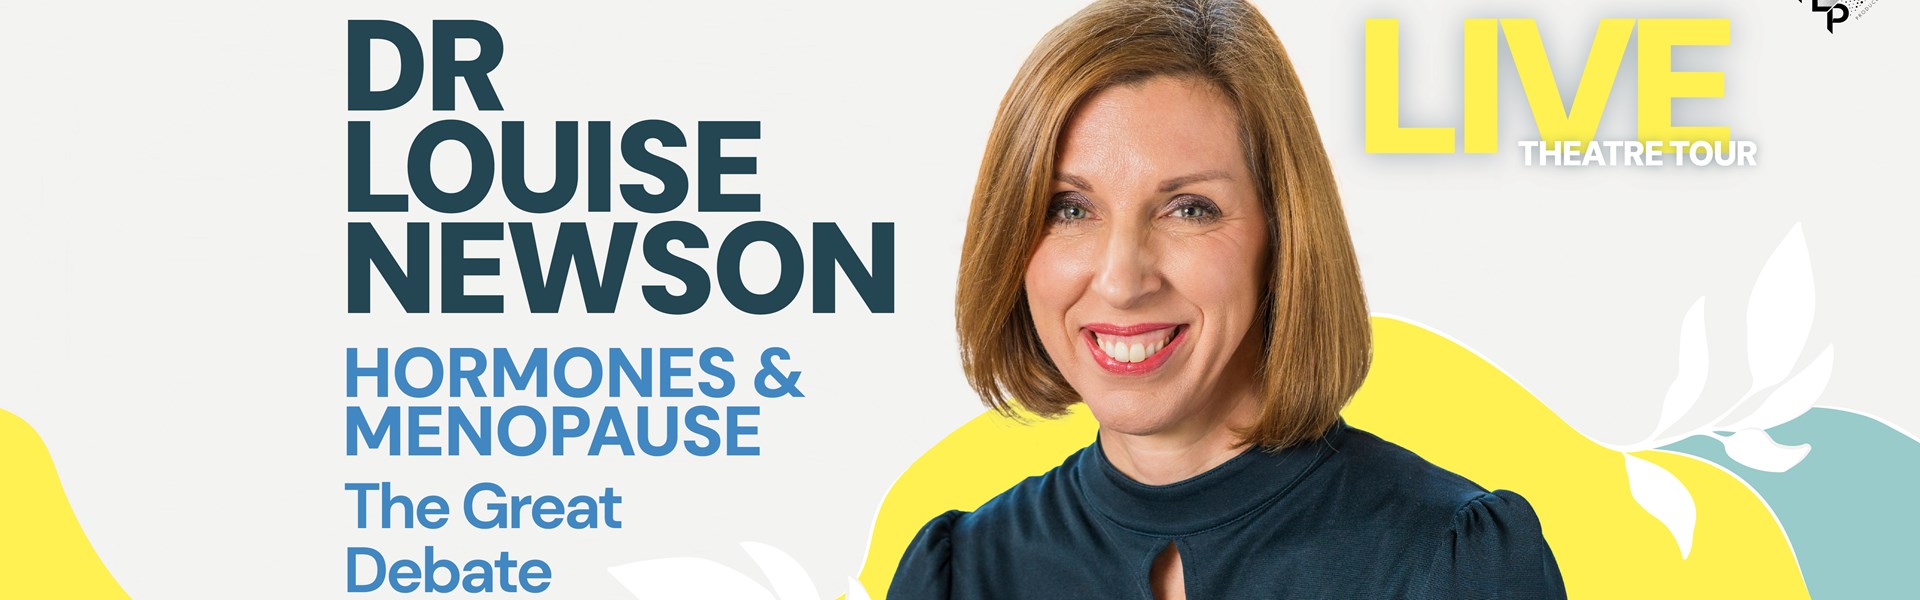 Dr Louise Newson: Hormones & Menopause - The Great Debate